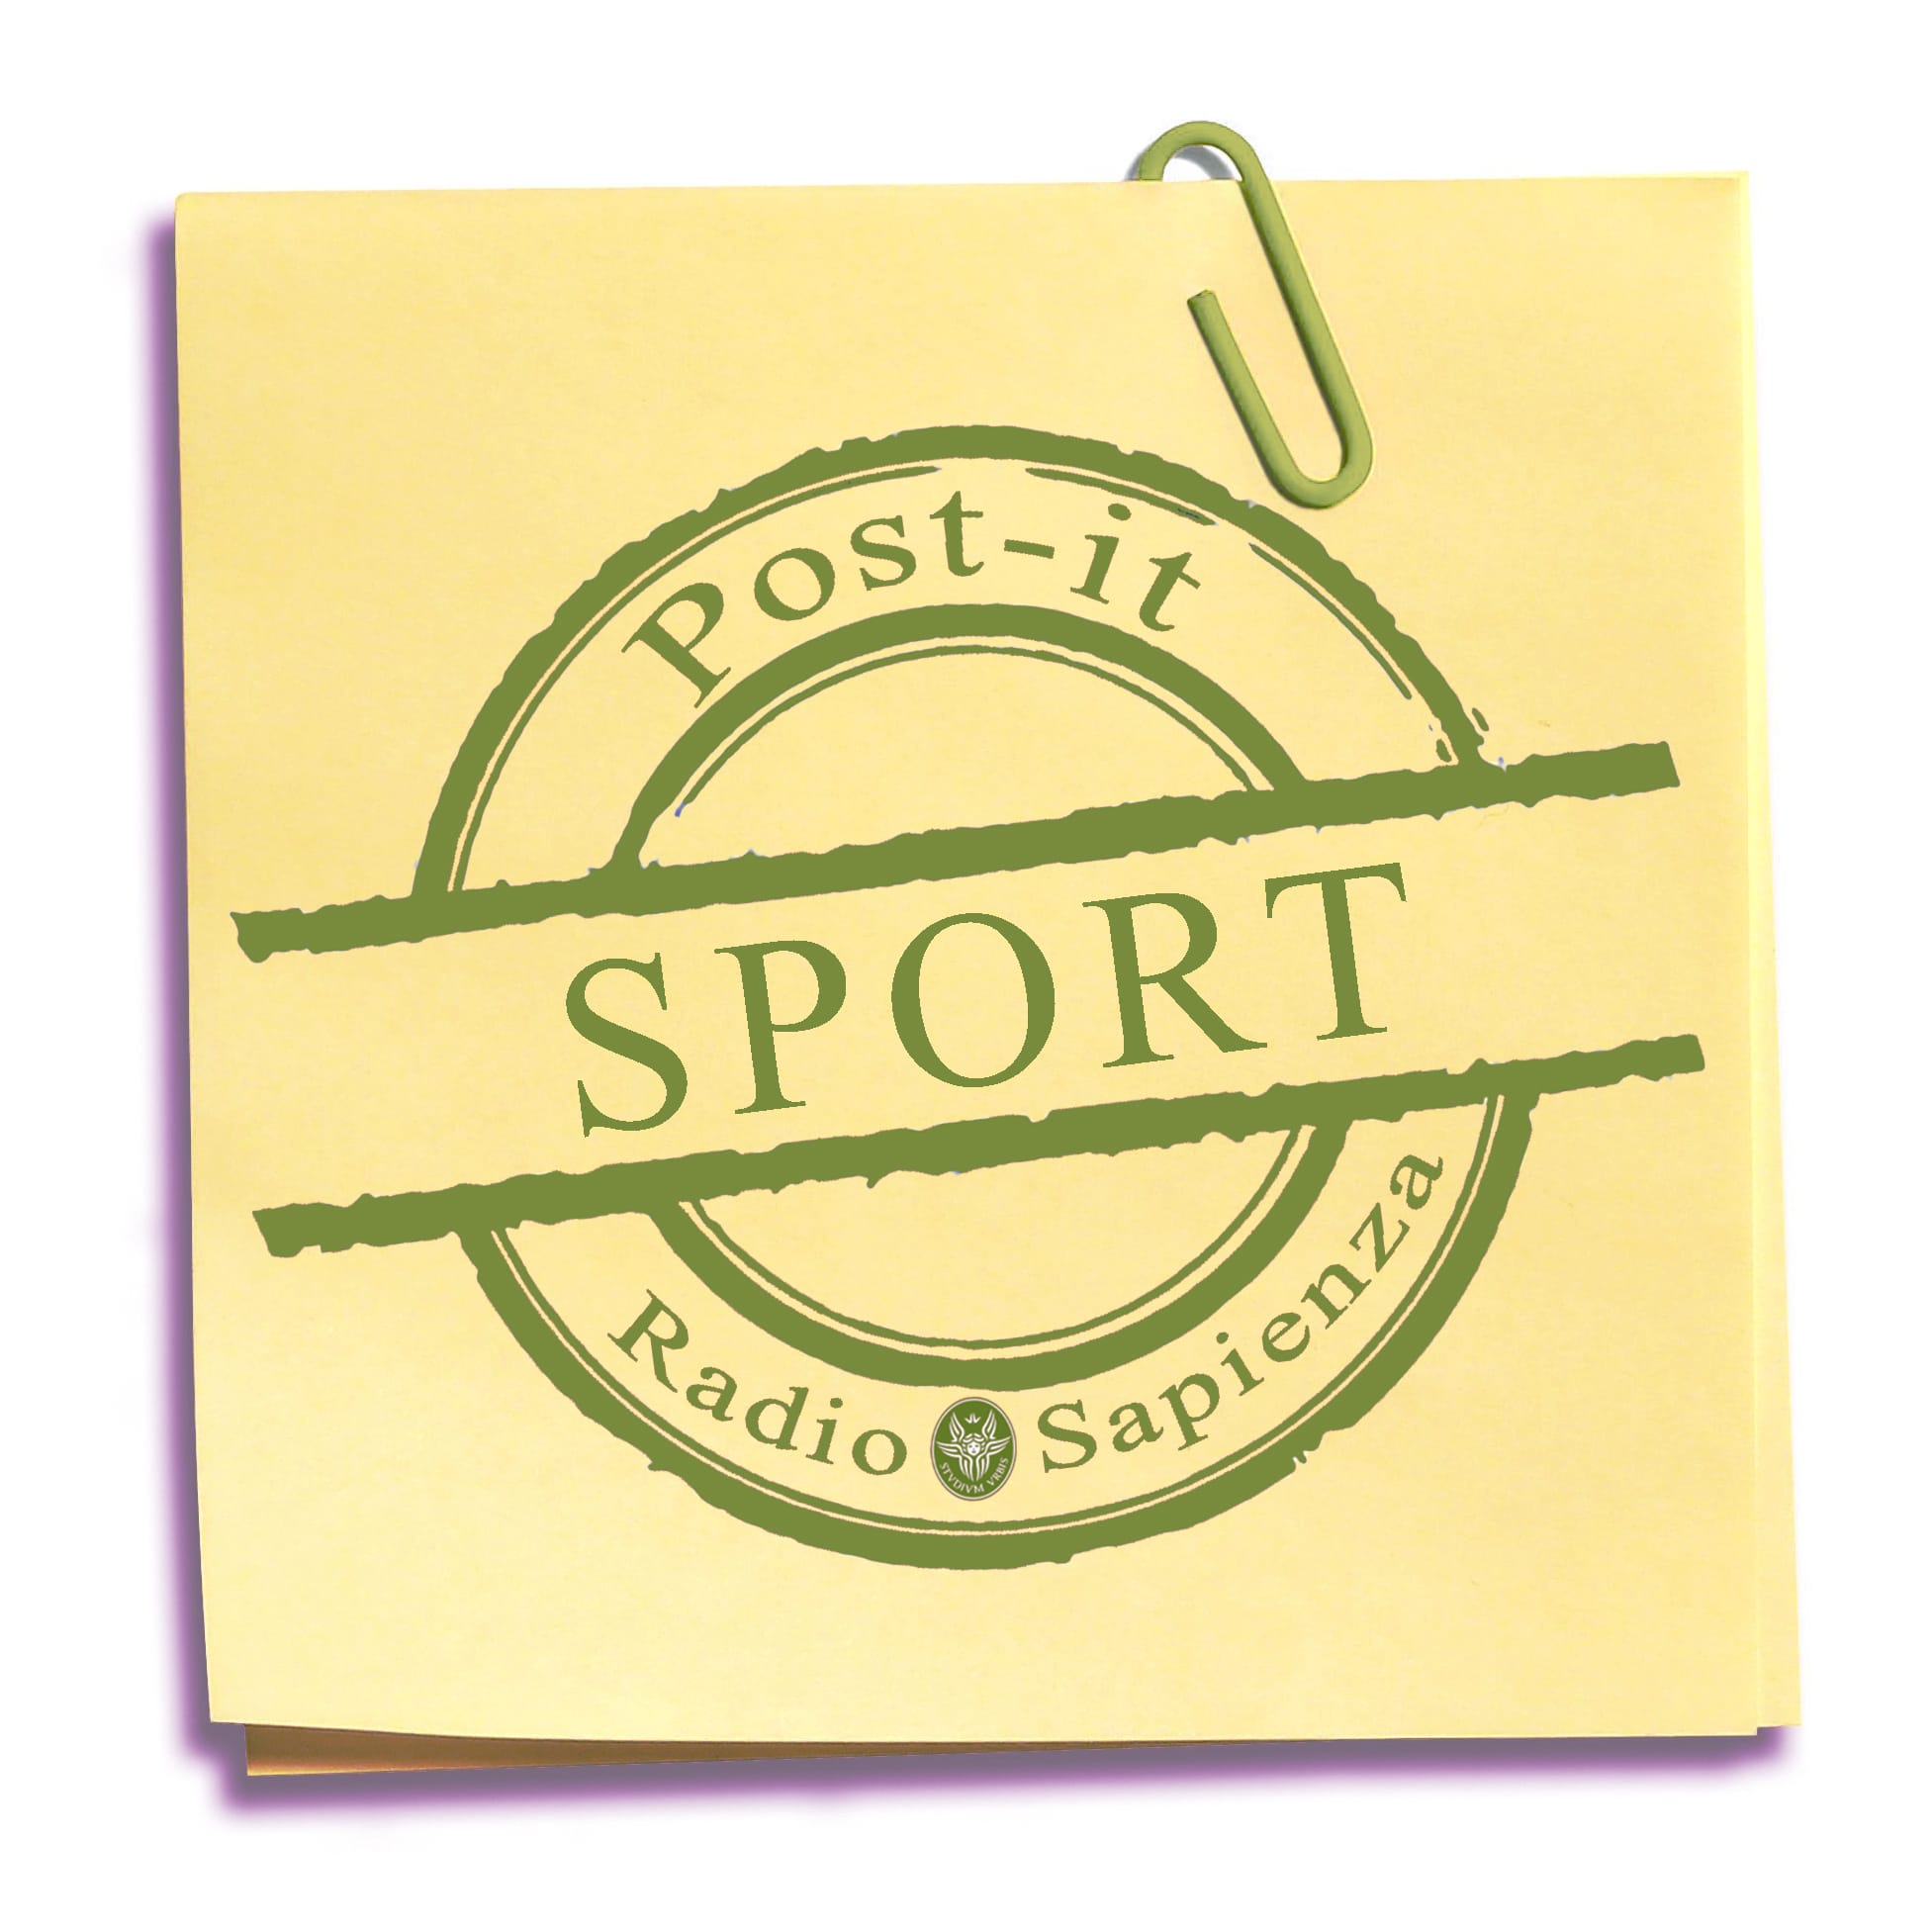 Post-it Sport – Giovedì 11 novembre